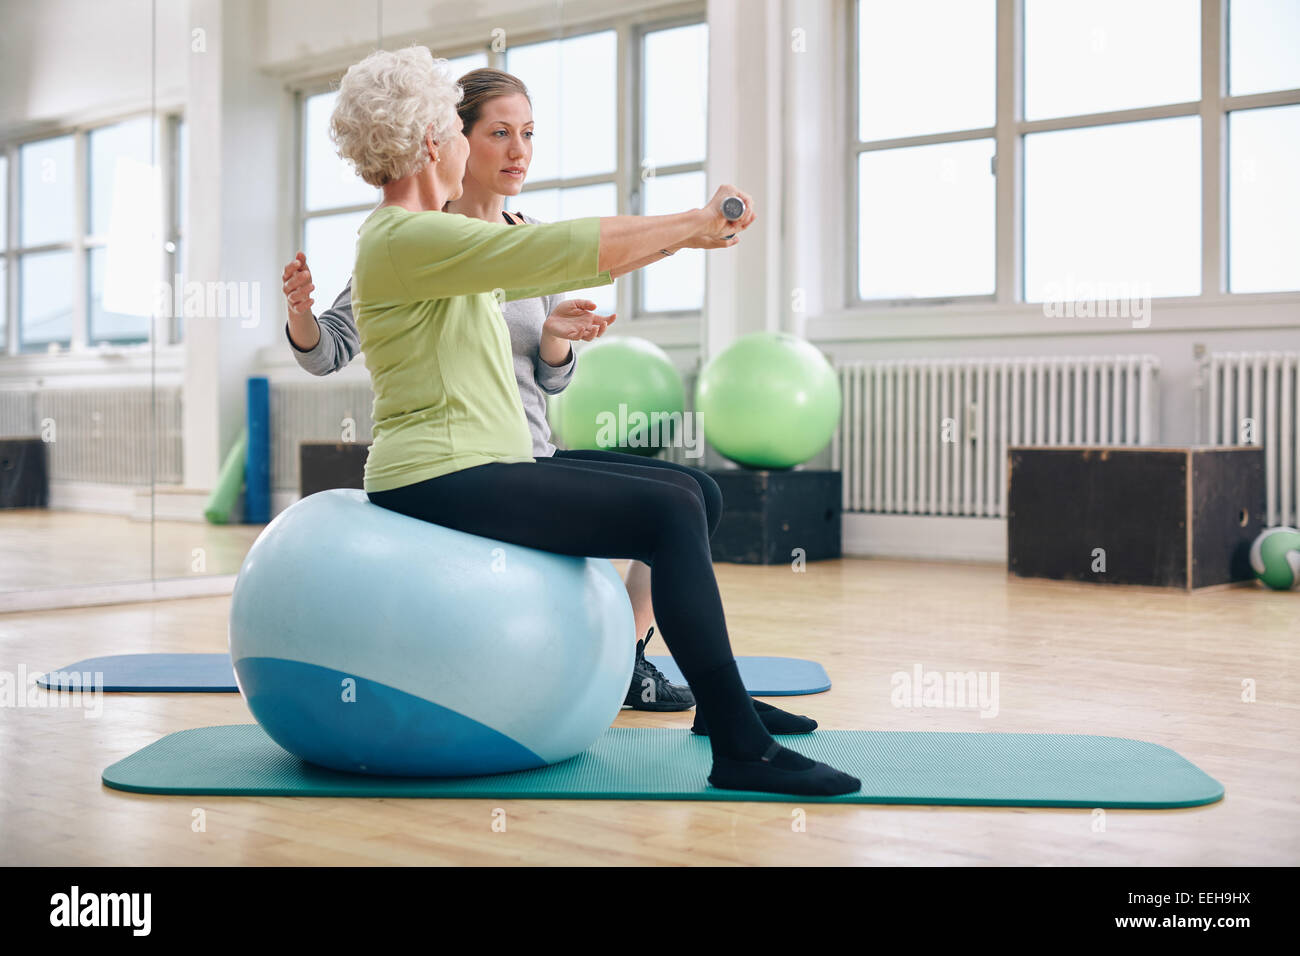 Formateur d'aider les femmes woman lifting weights in gym. Senior woman sitting on balle Pilates poids faisant de l'exercice. Banque D'Images